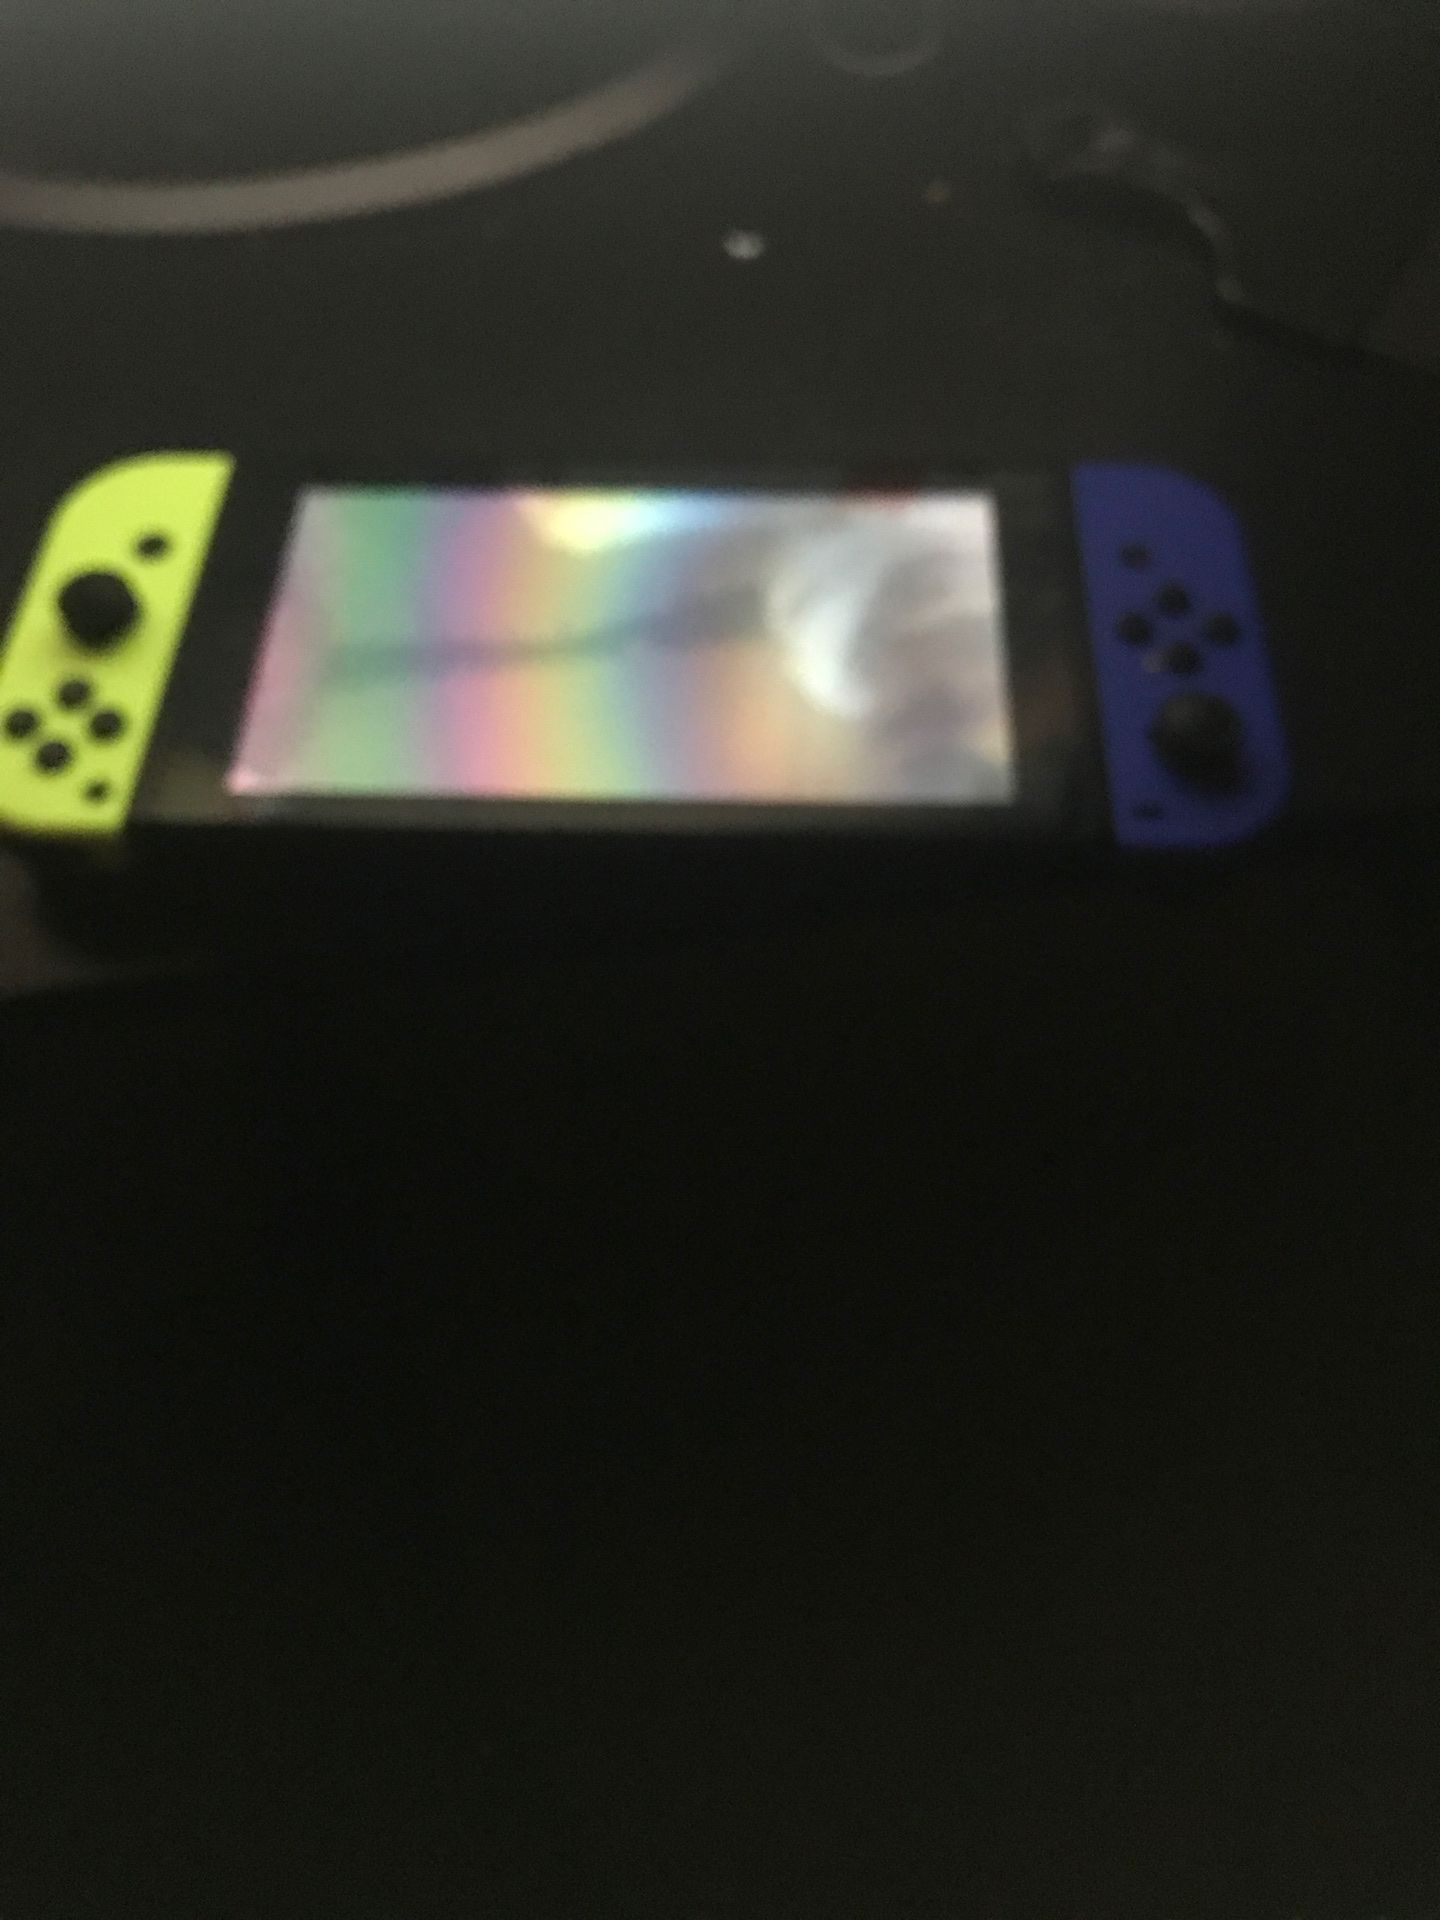 Nintendo switch dark blue and highlighter yellow